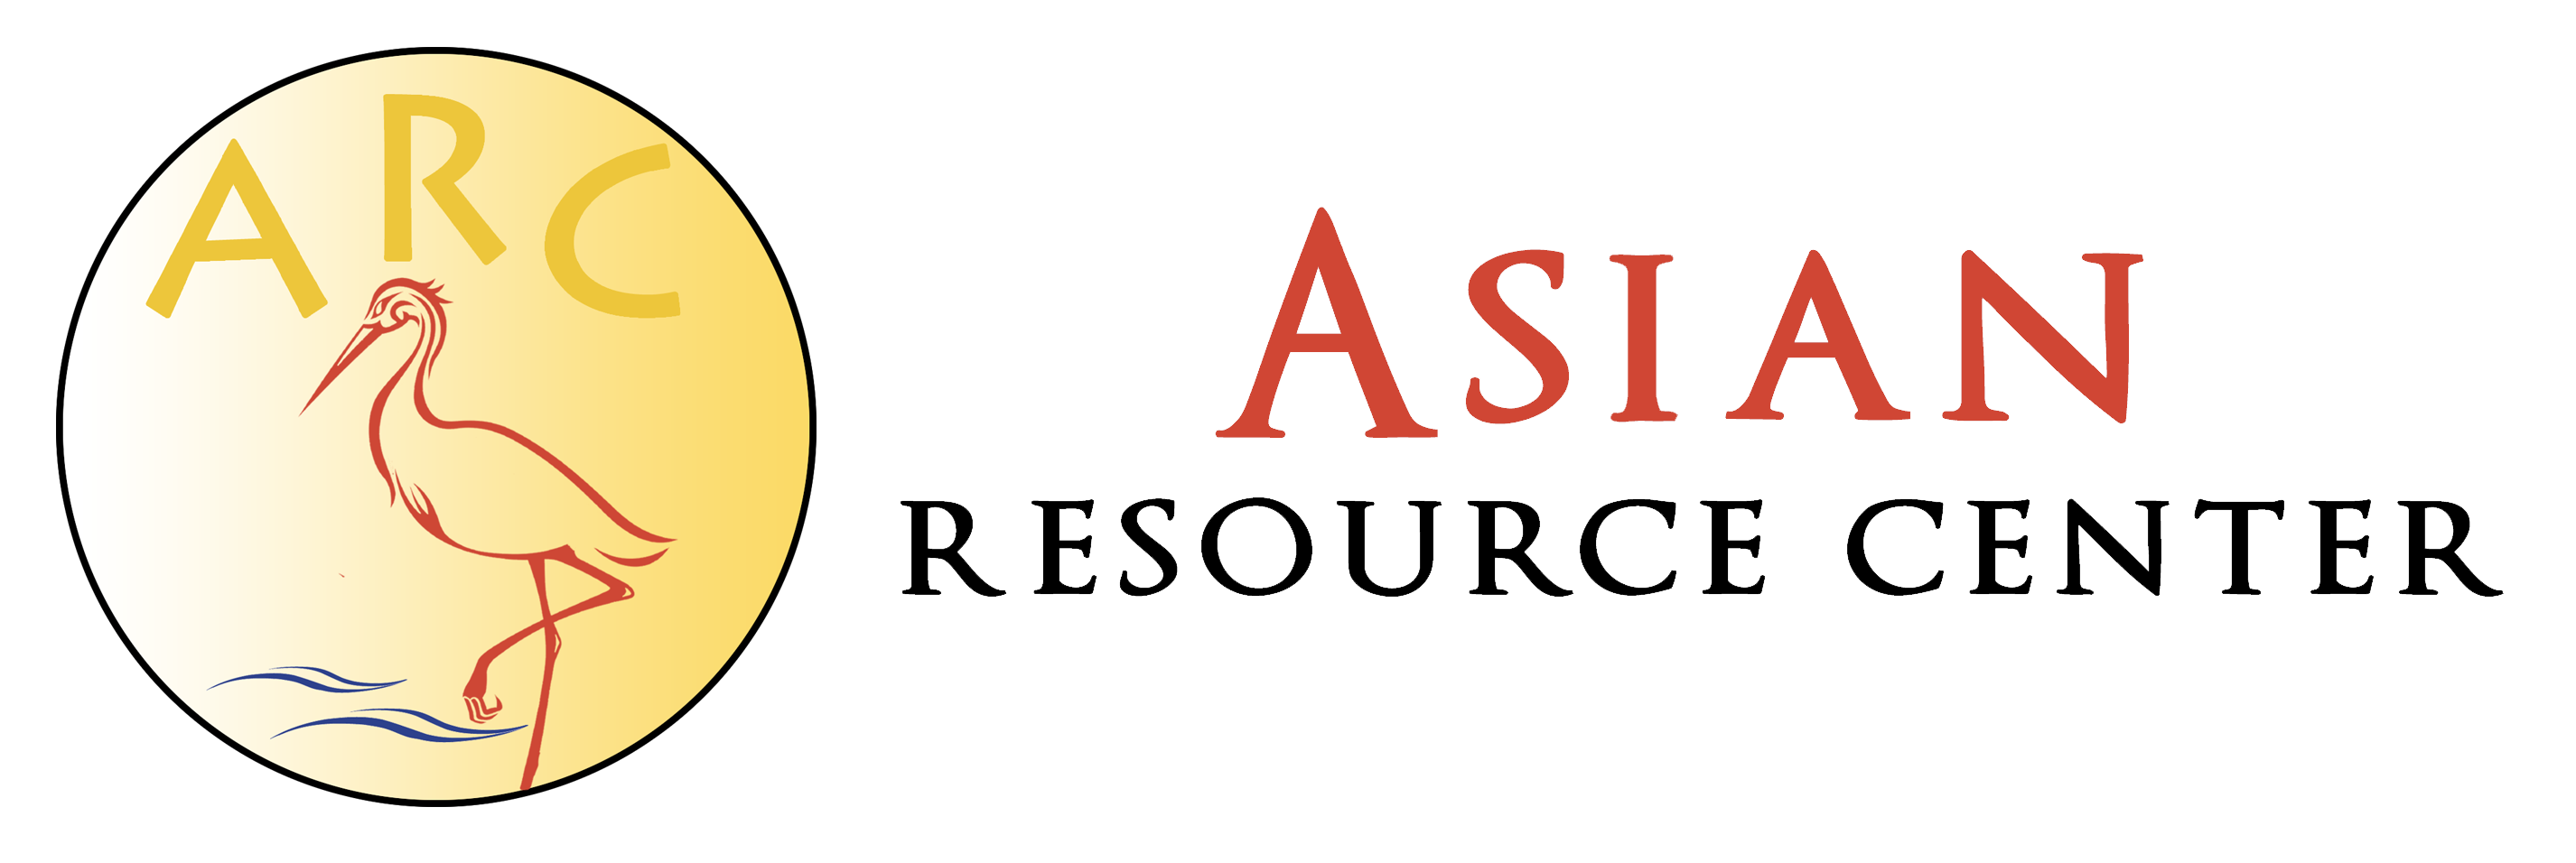 Asian Resource Center (ARC)